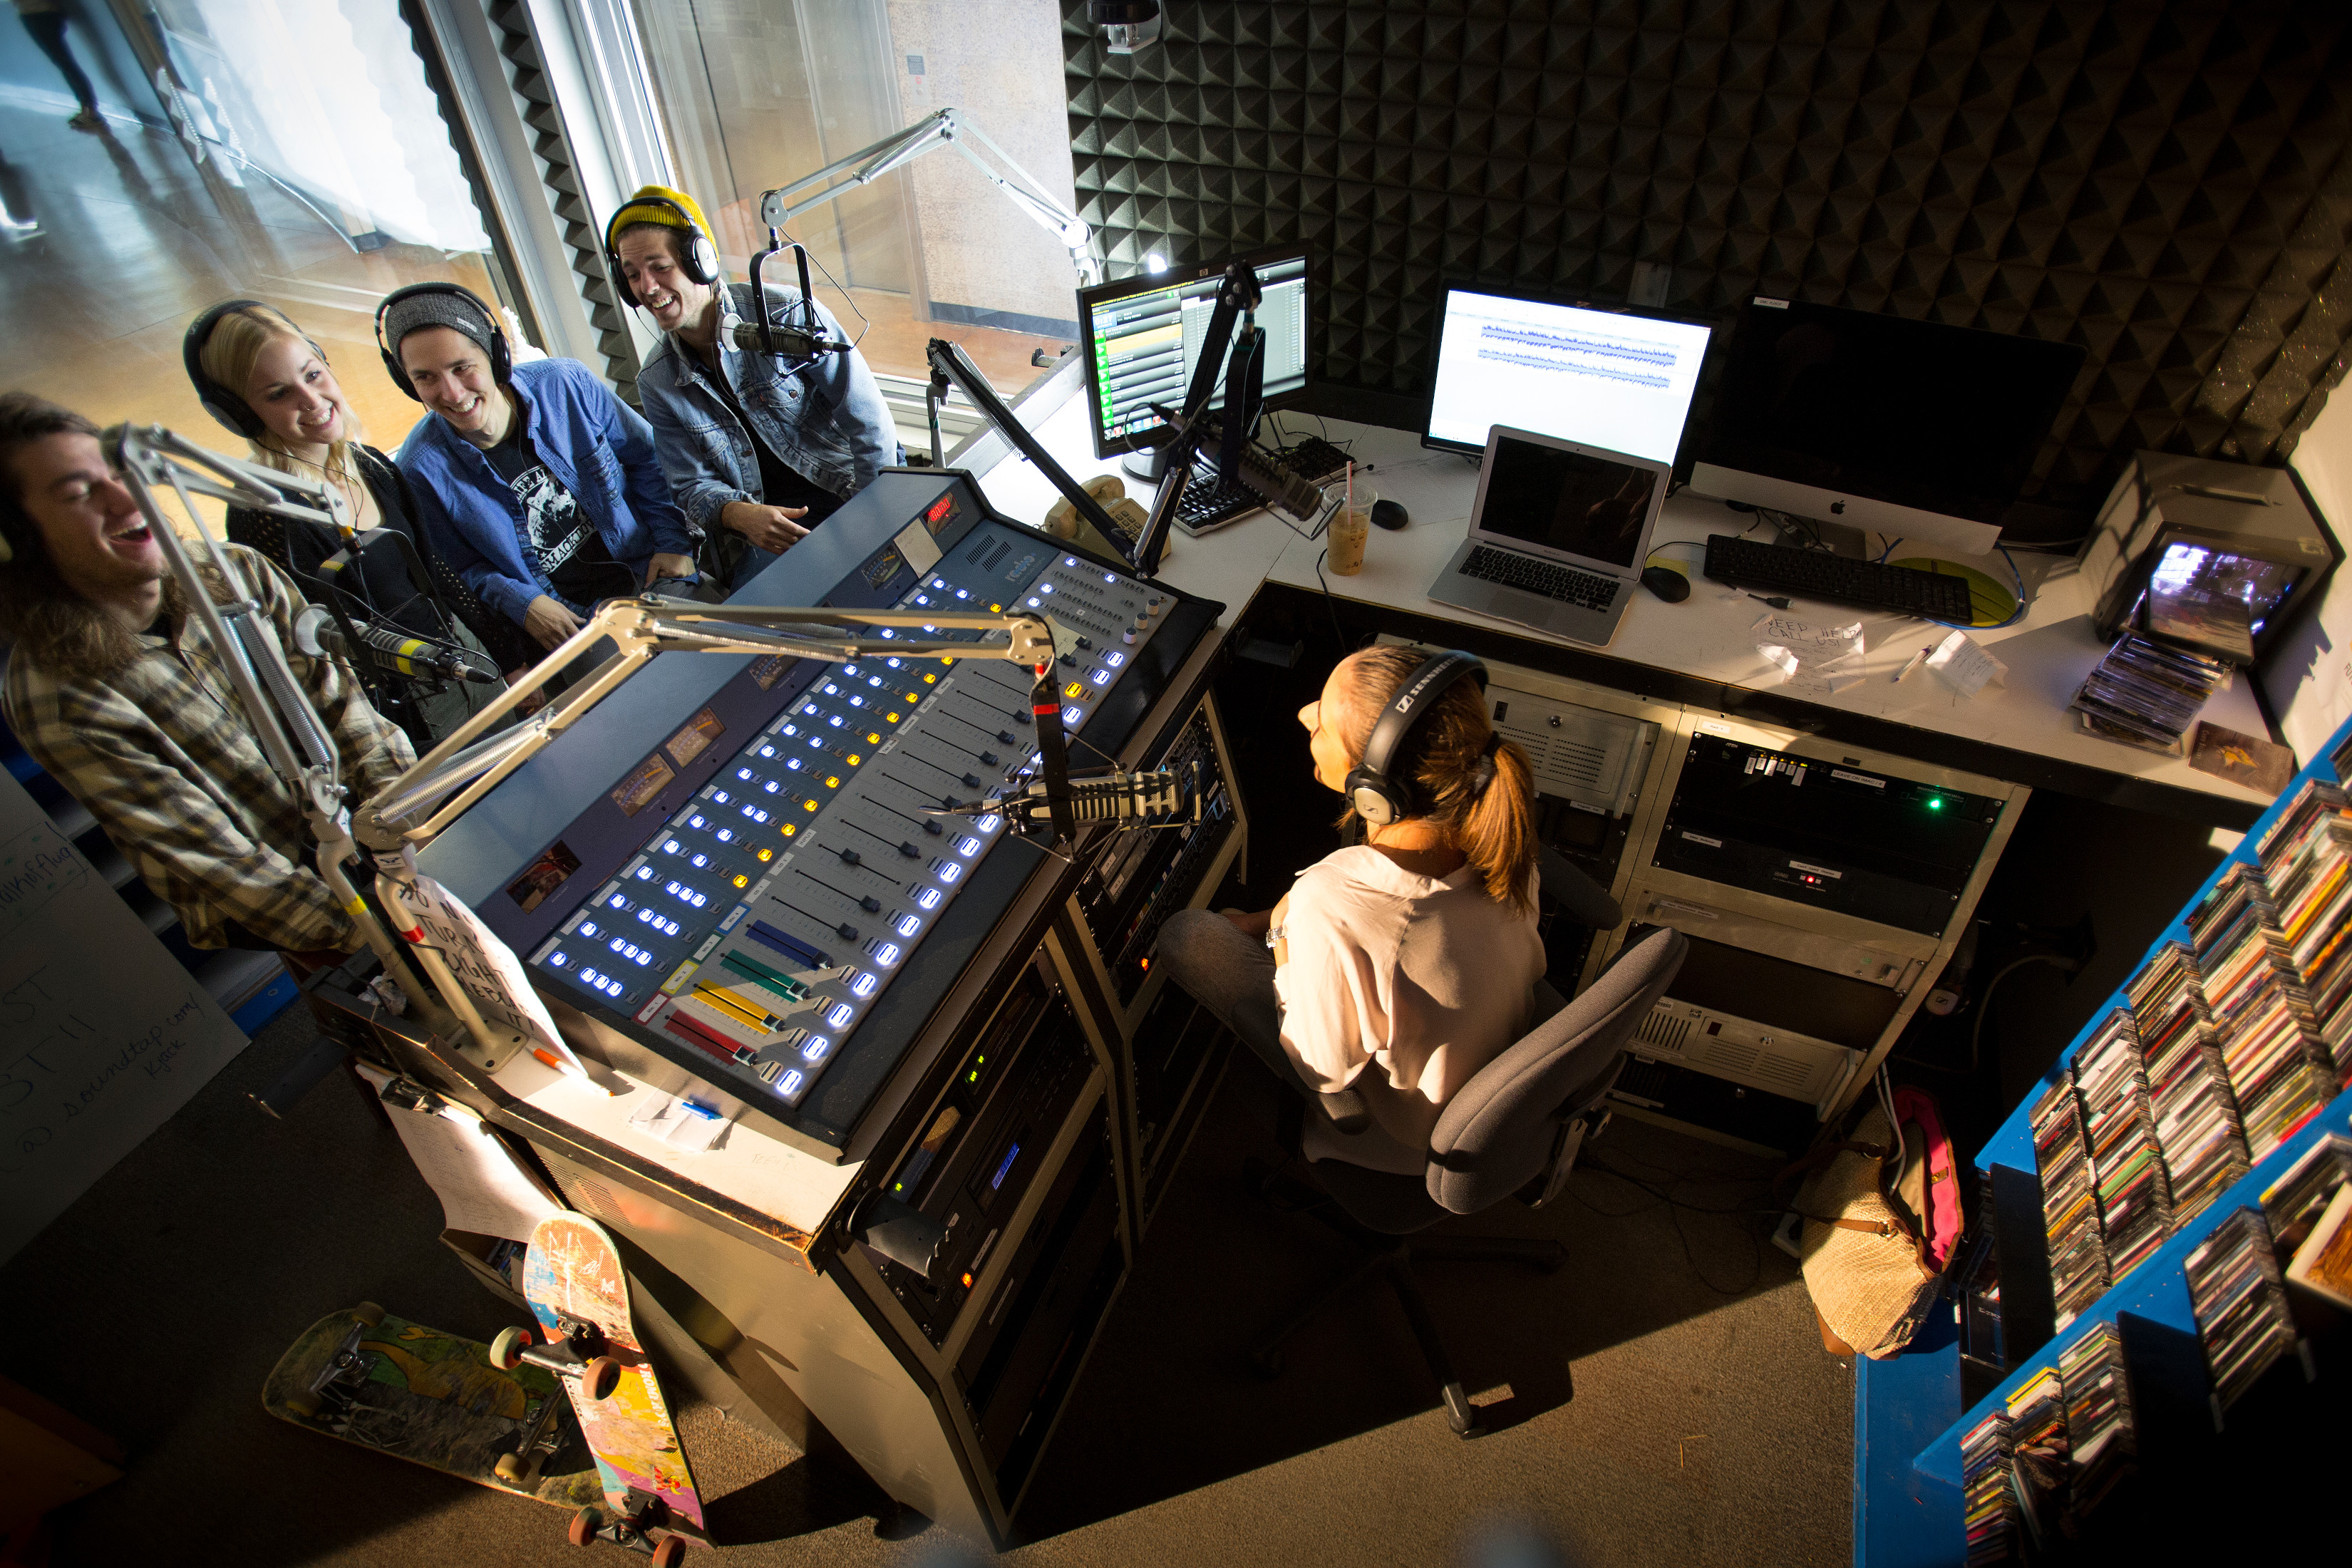 Inside the KJack studio, NAU student radio host is interviewing visitors.